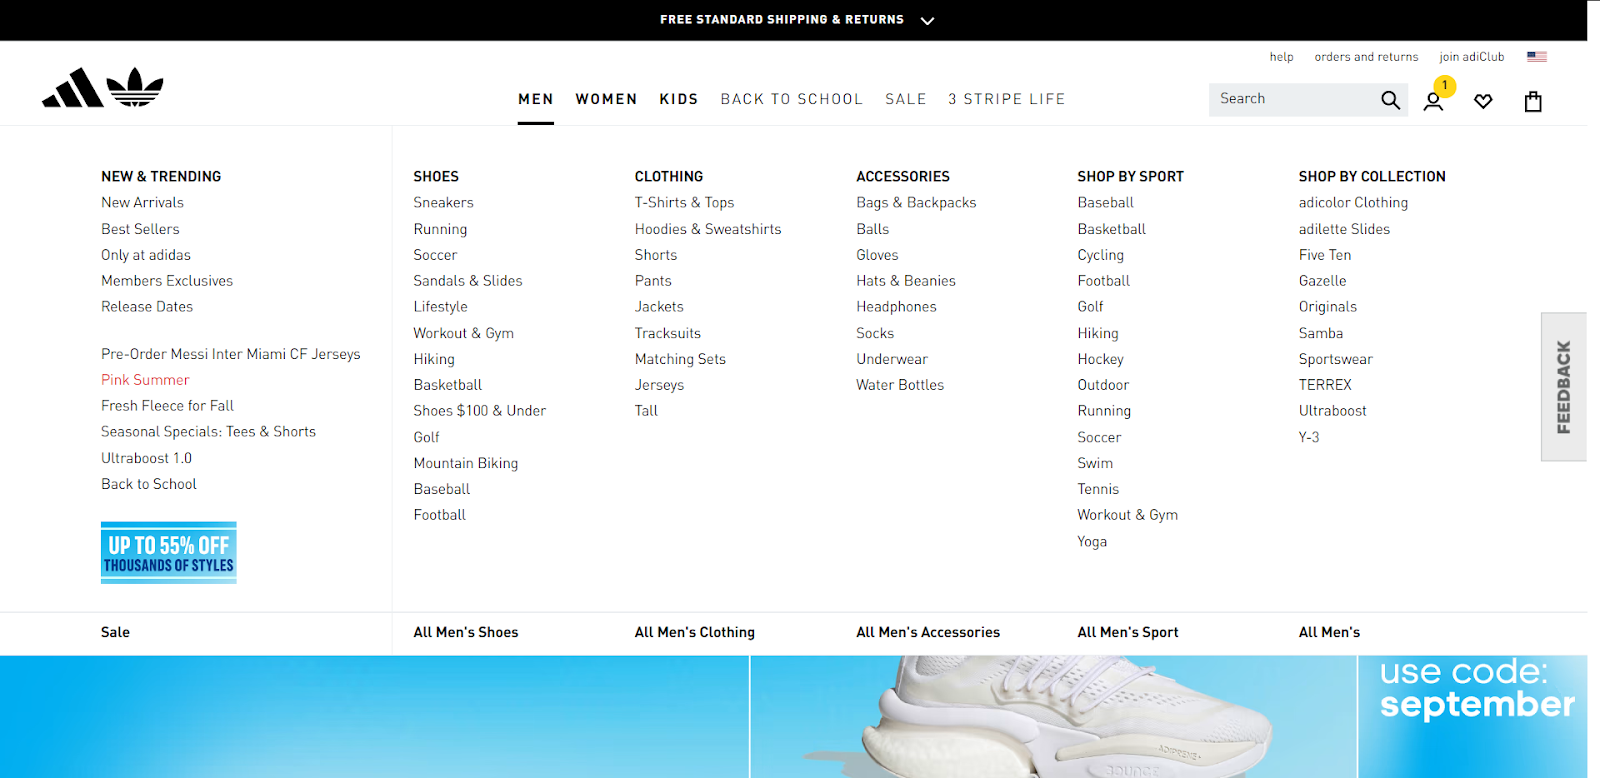 Adidas’ homepage illustrating subcategories in the navigation menu